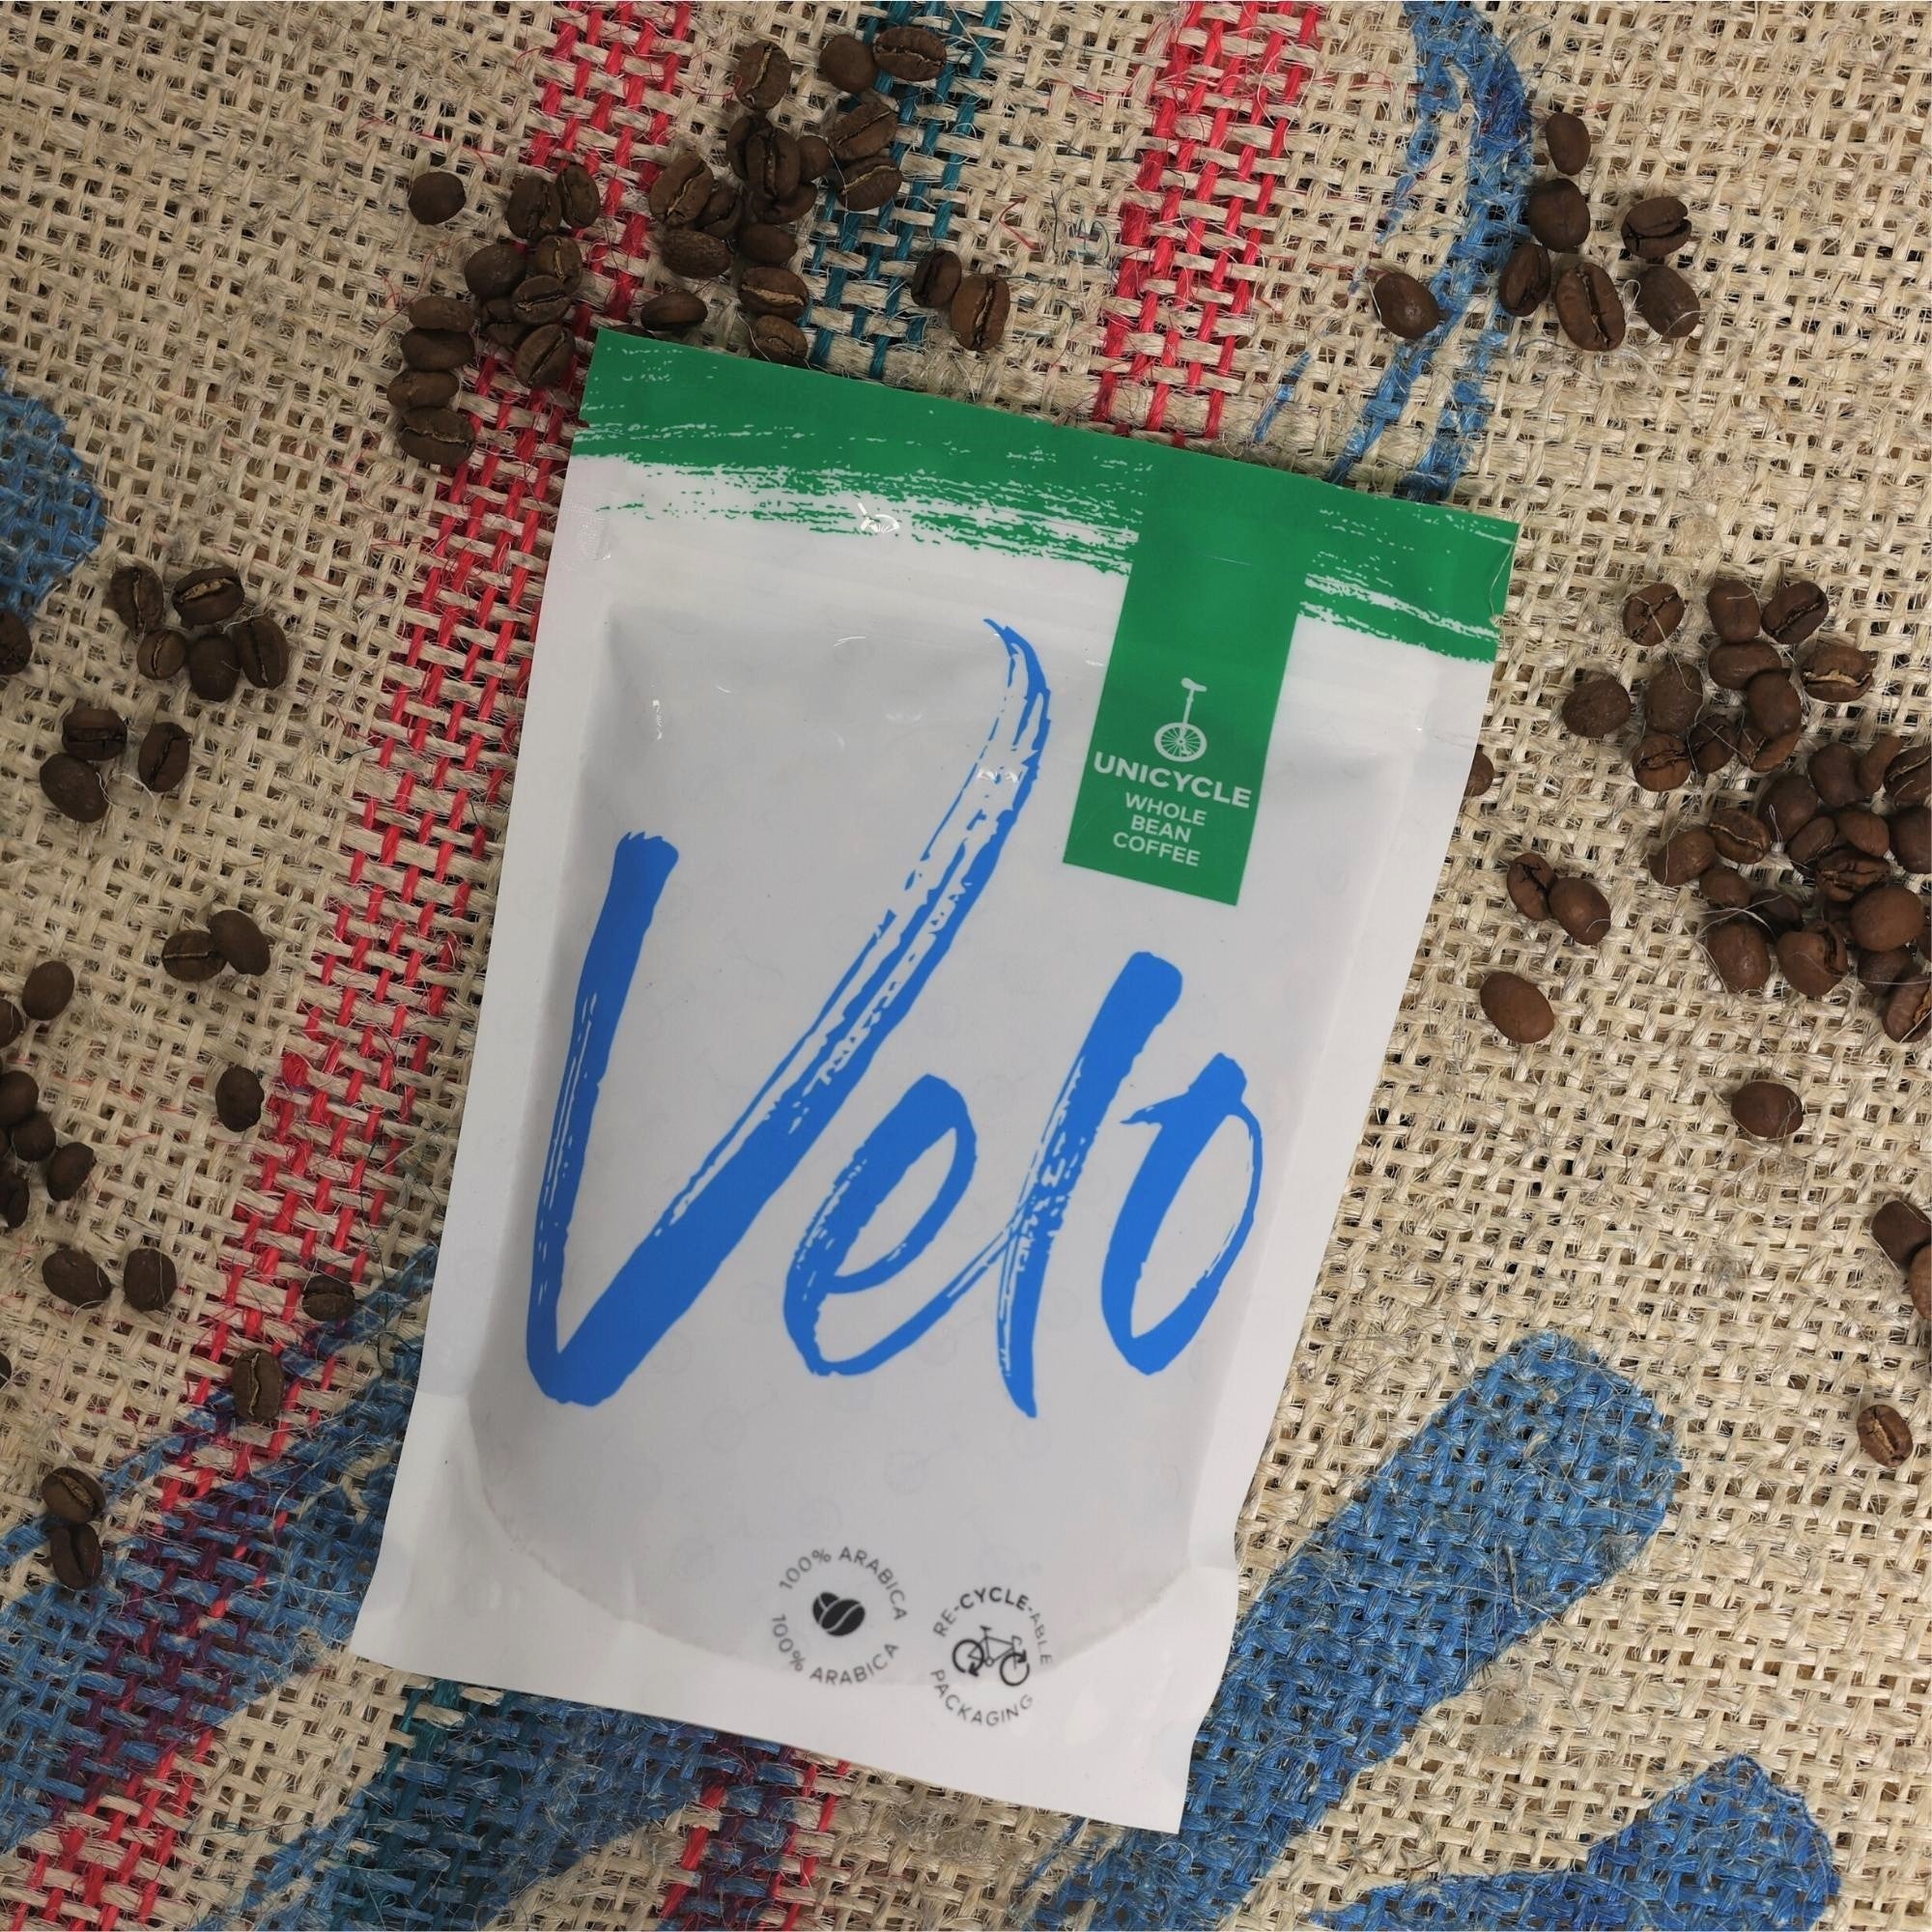 Sasini Estate 200g Coffee Bag Kenya - Velo Coffee Roasters